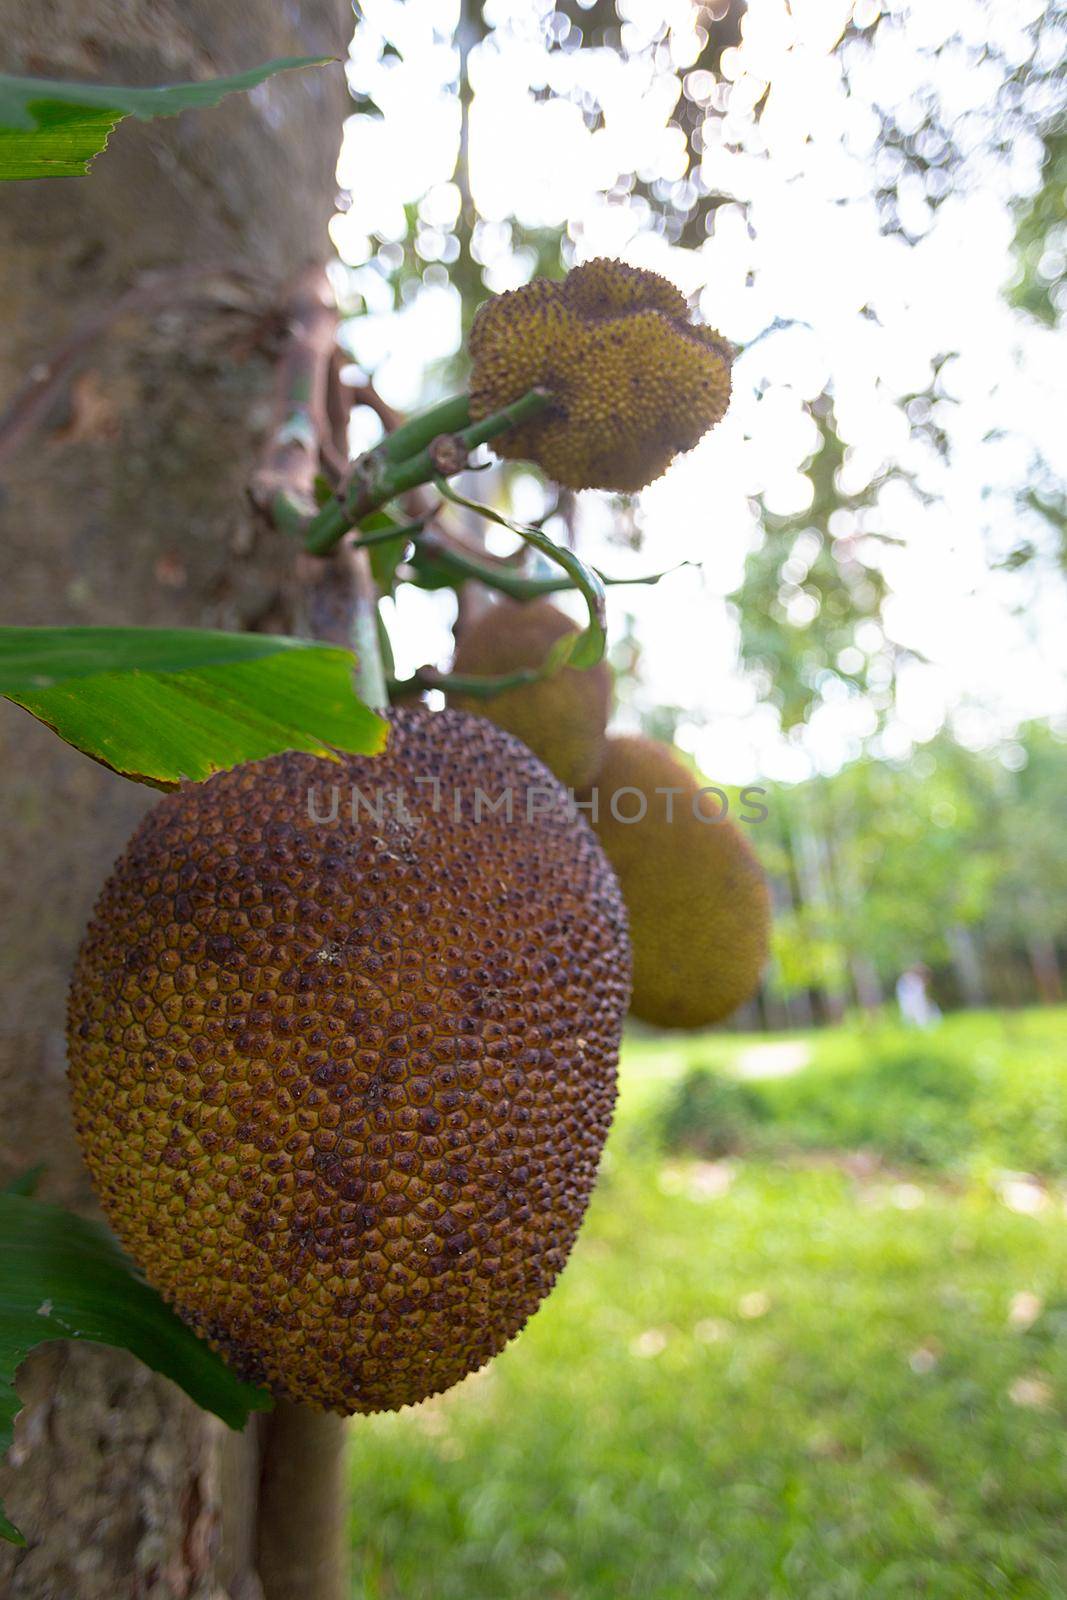 Durian tree, Fresh durian fruit on tree